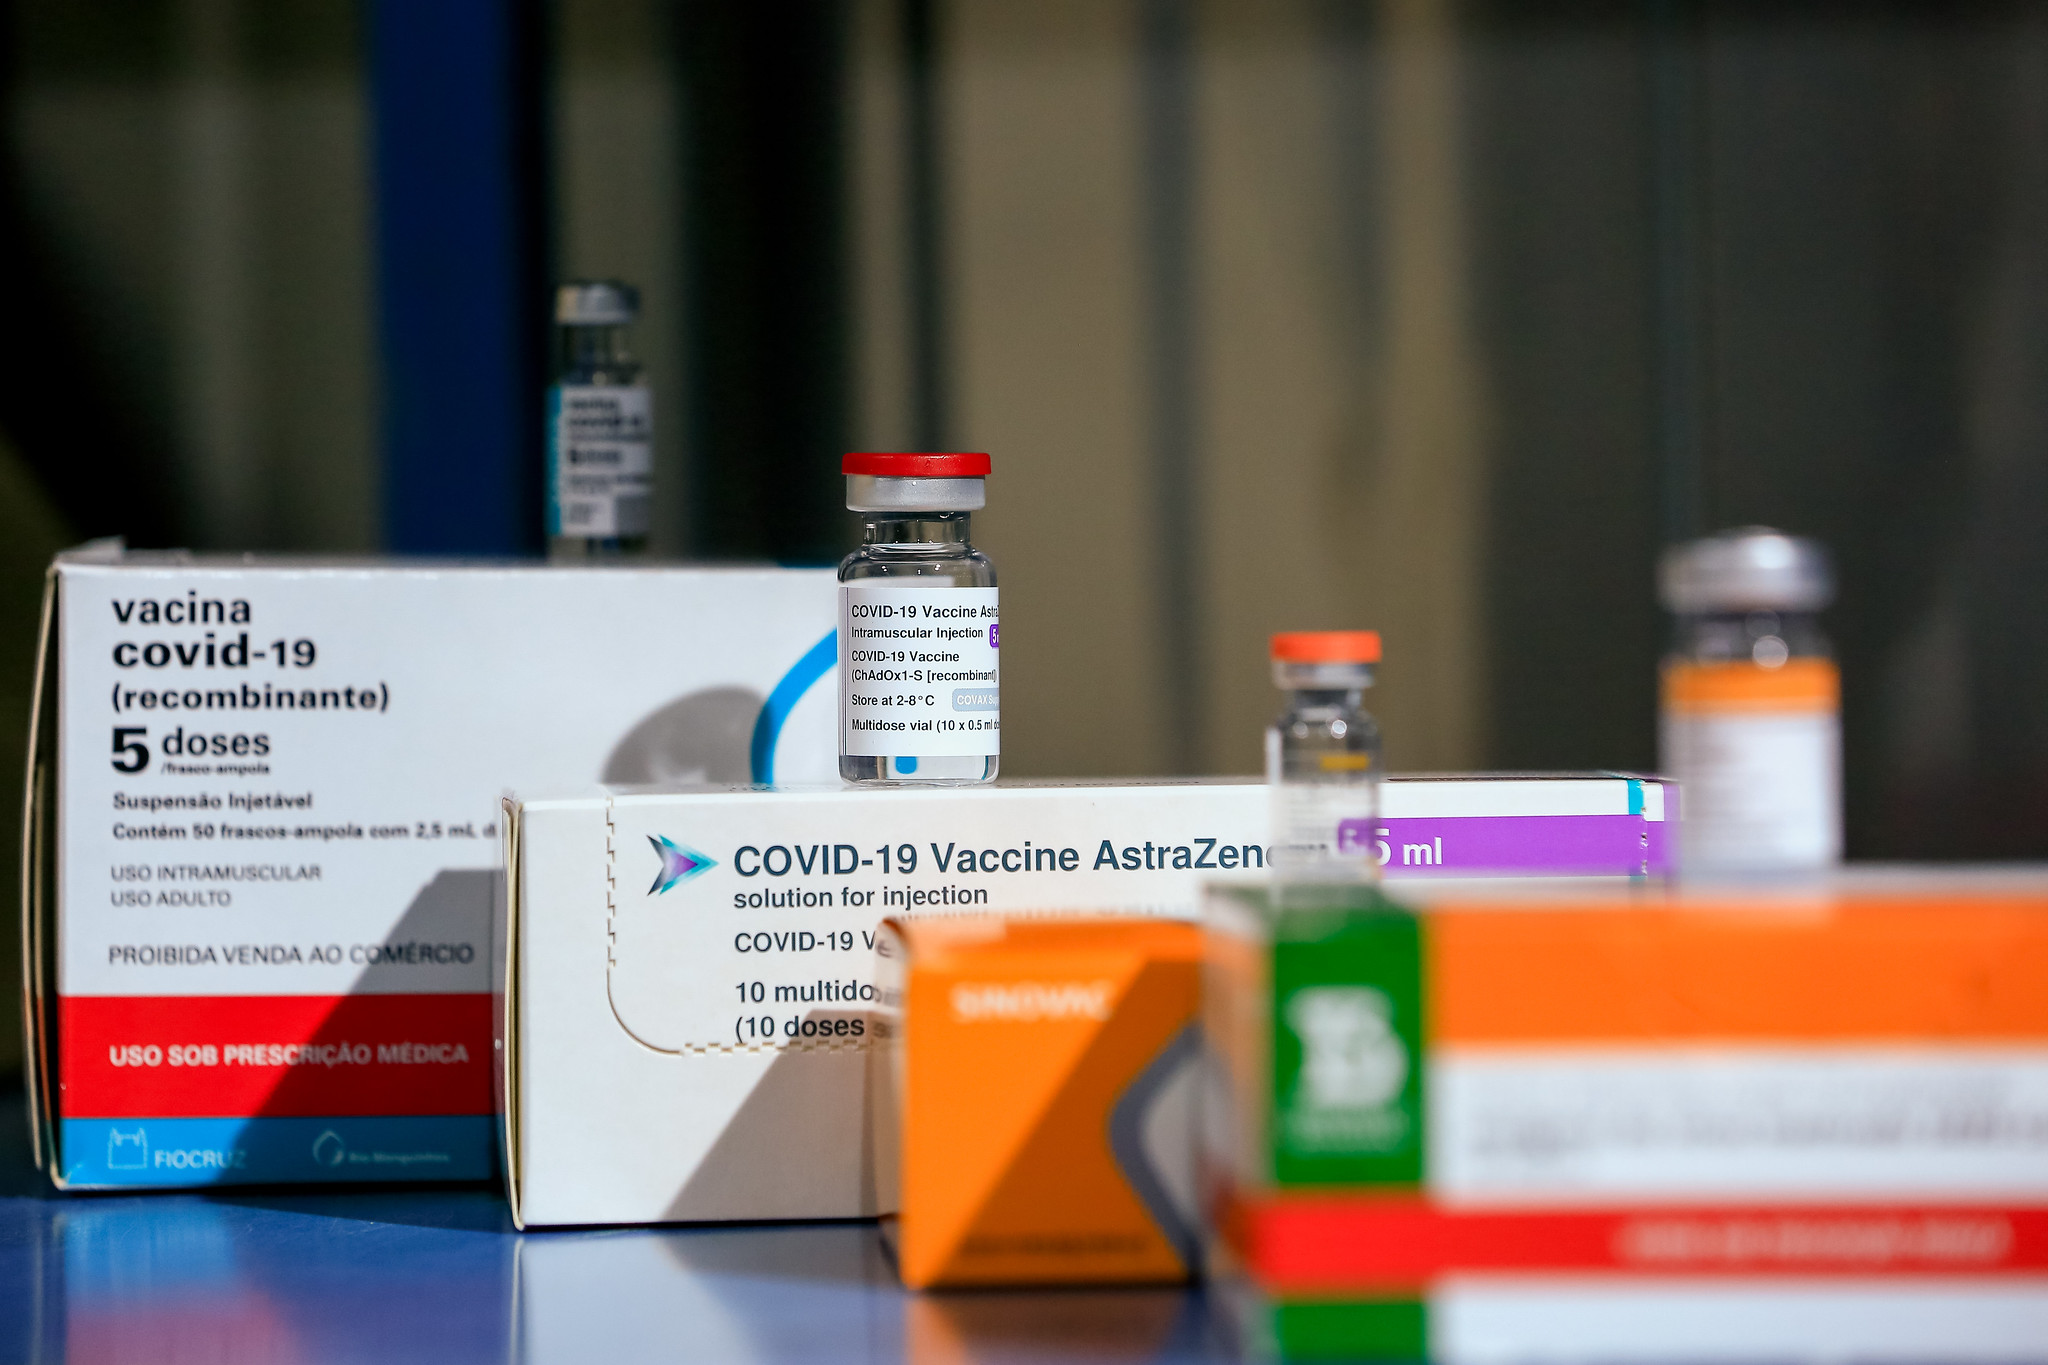 Vaccines against Covid-19